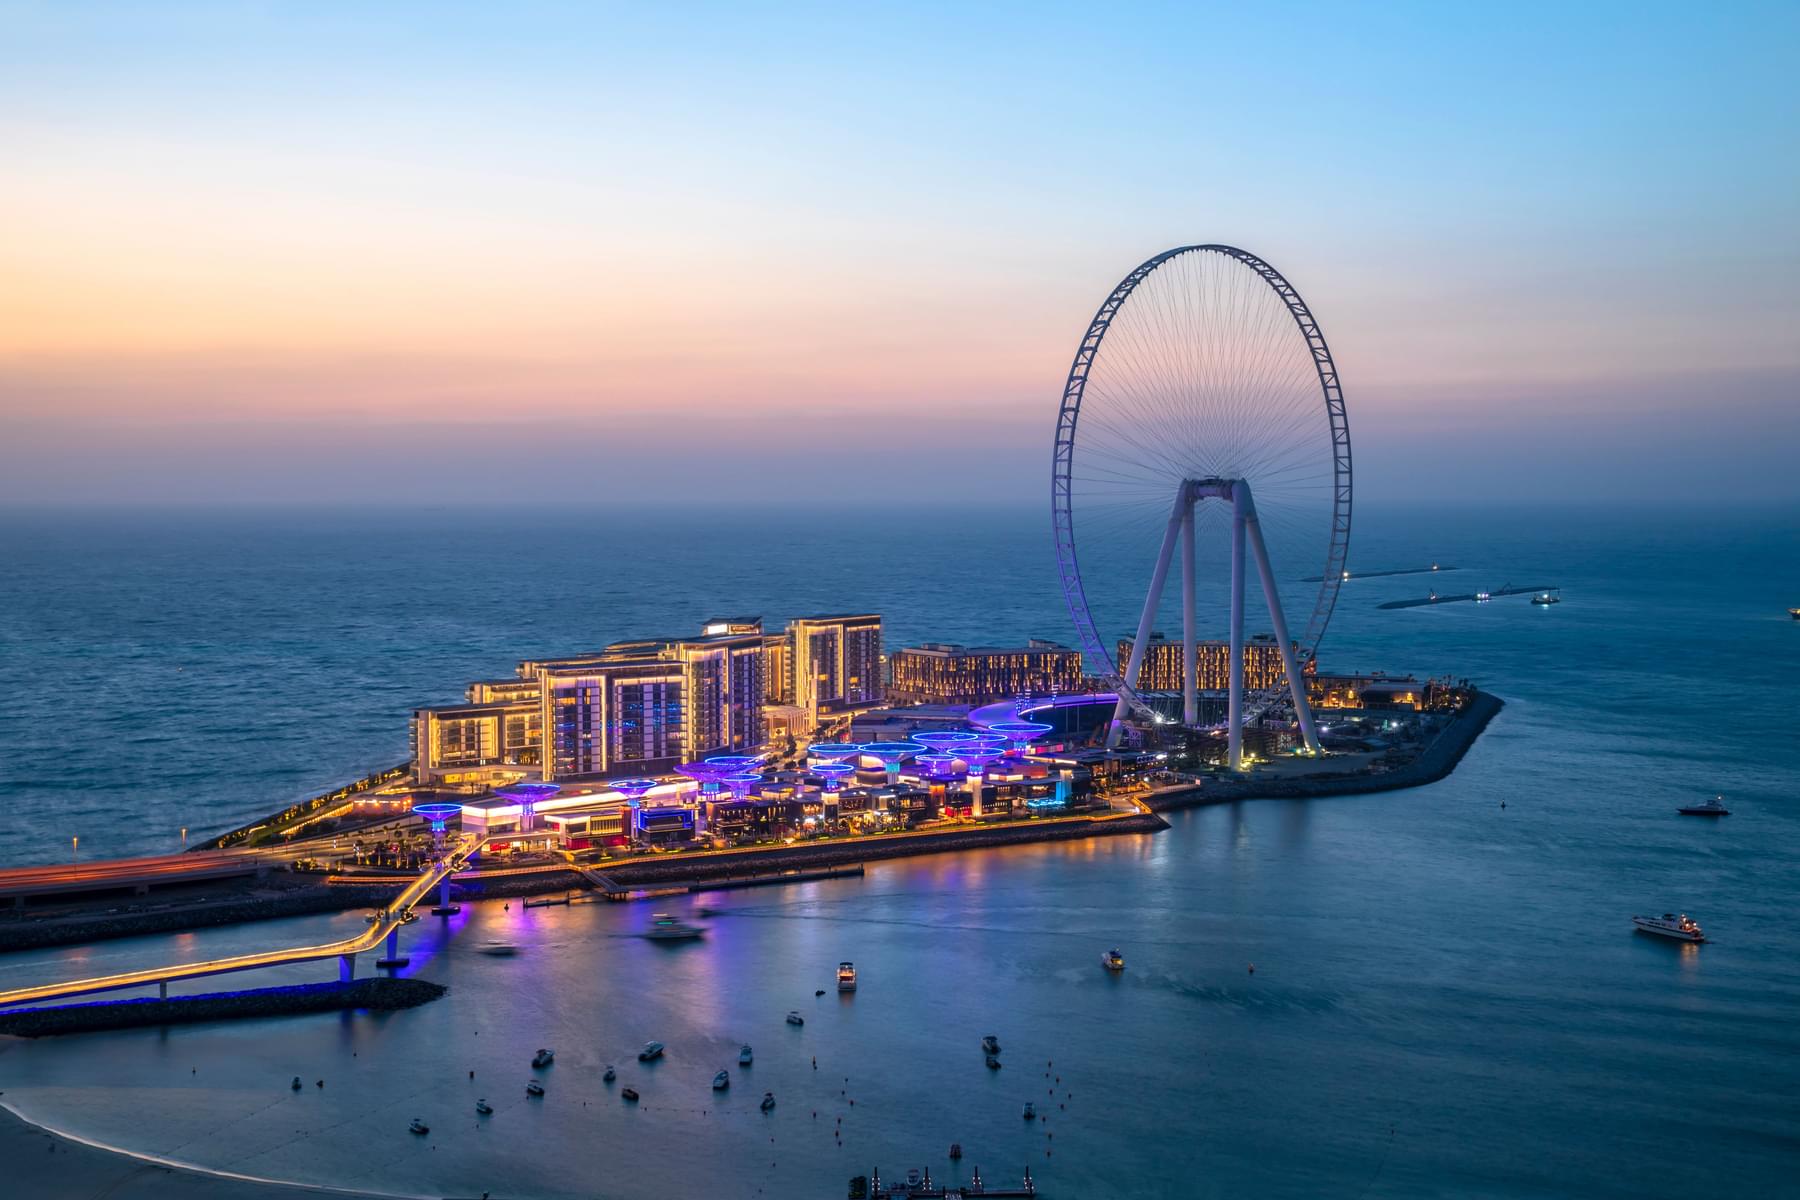 Architecture of Ain Dubai Observation Wheel